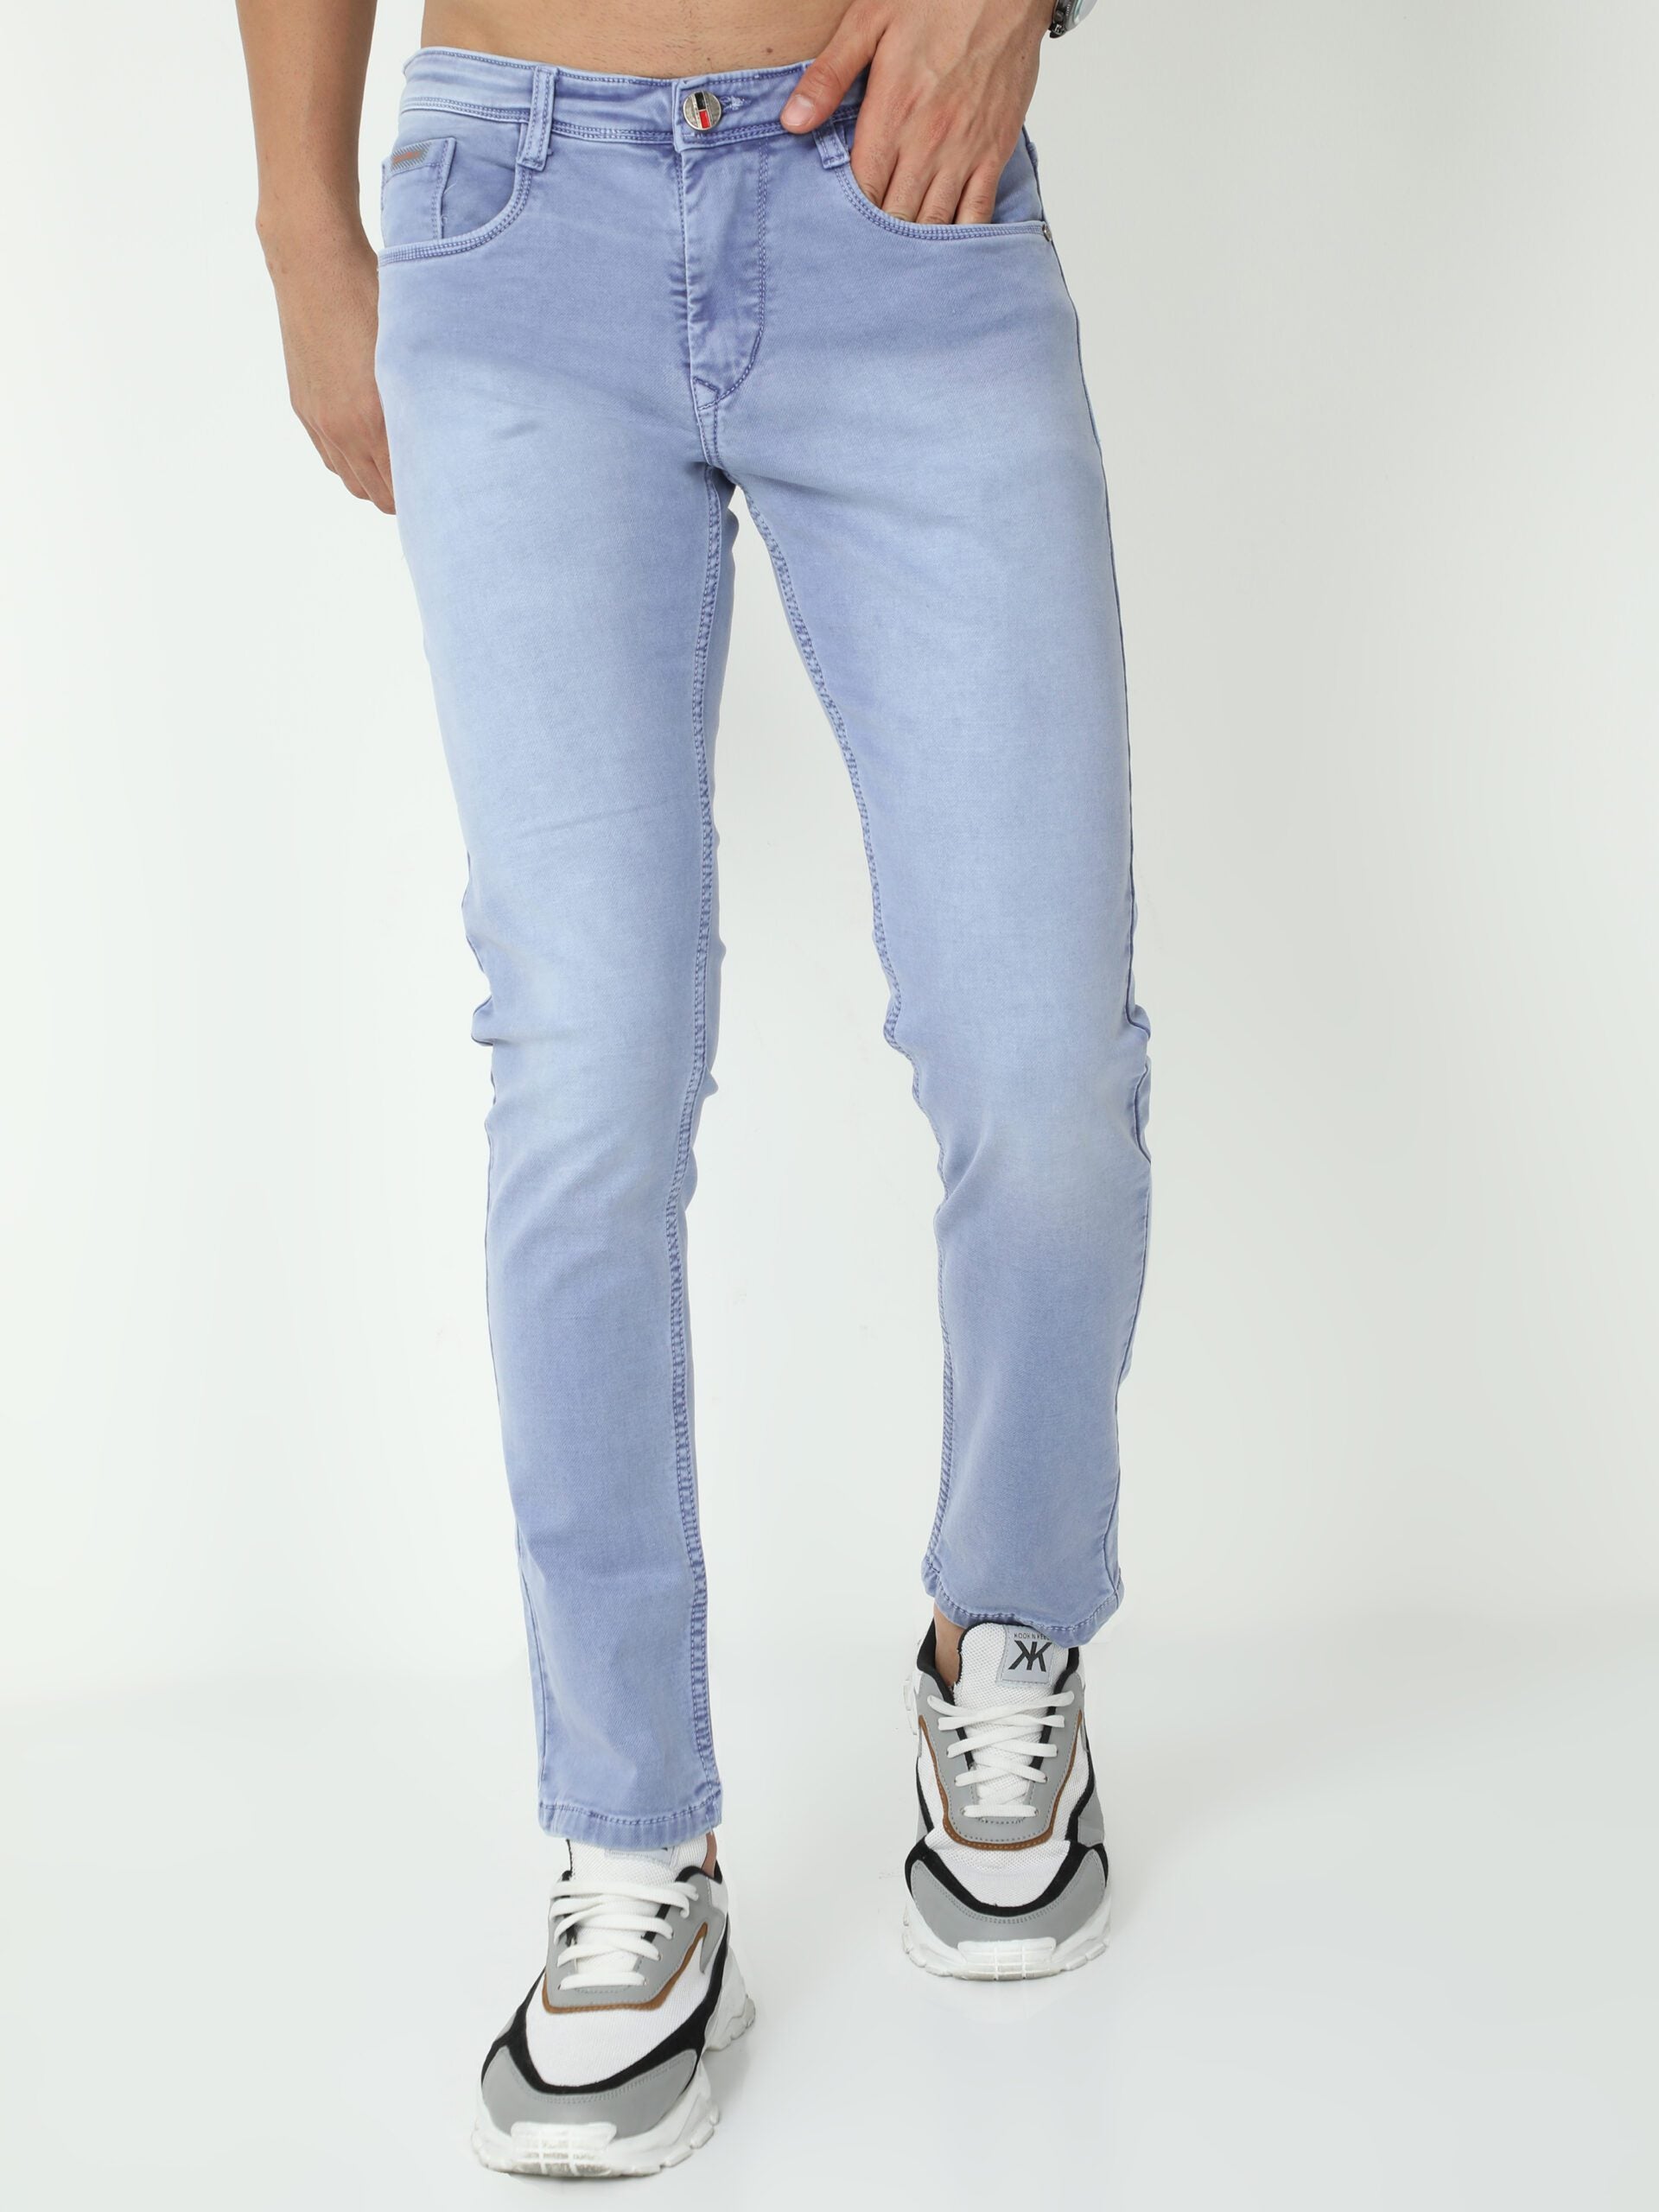 Calça Lycra Jeans for Men: Combining Comfort and Style Effortlessly | Mens  jeans, Smart casual attire, Lycra